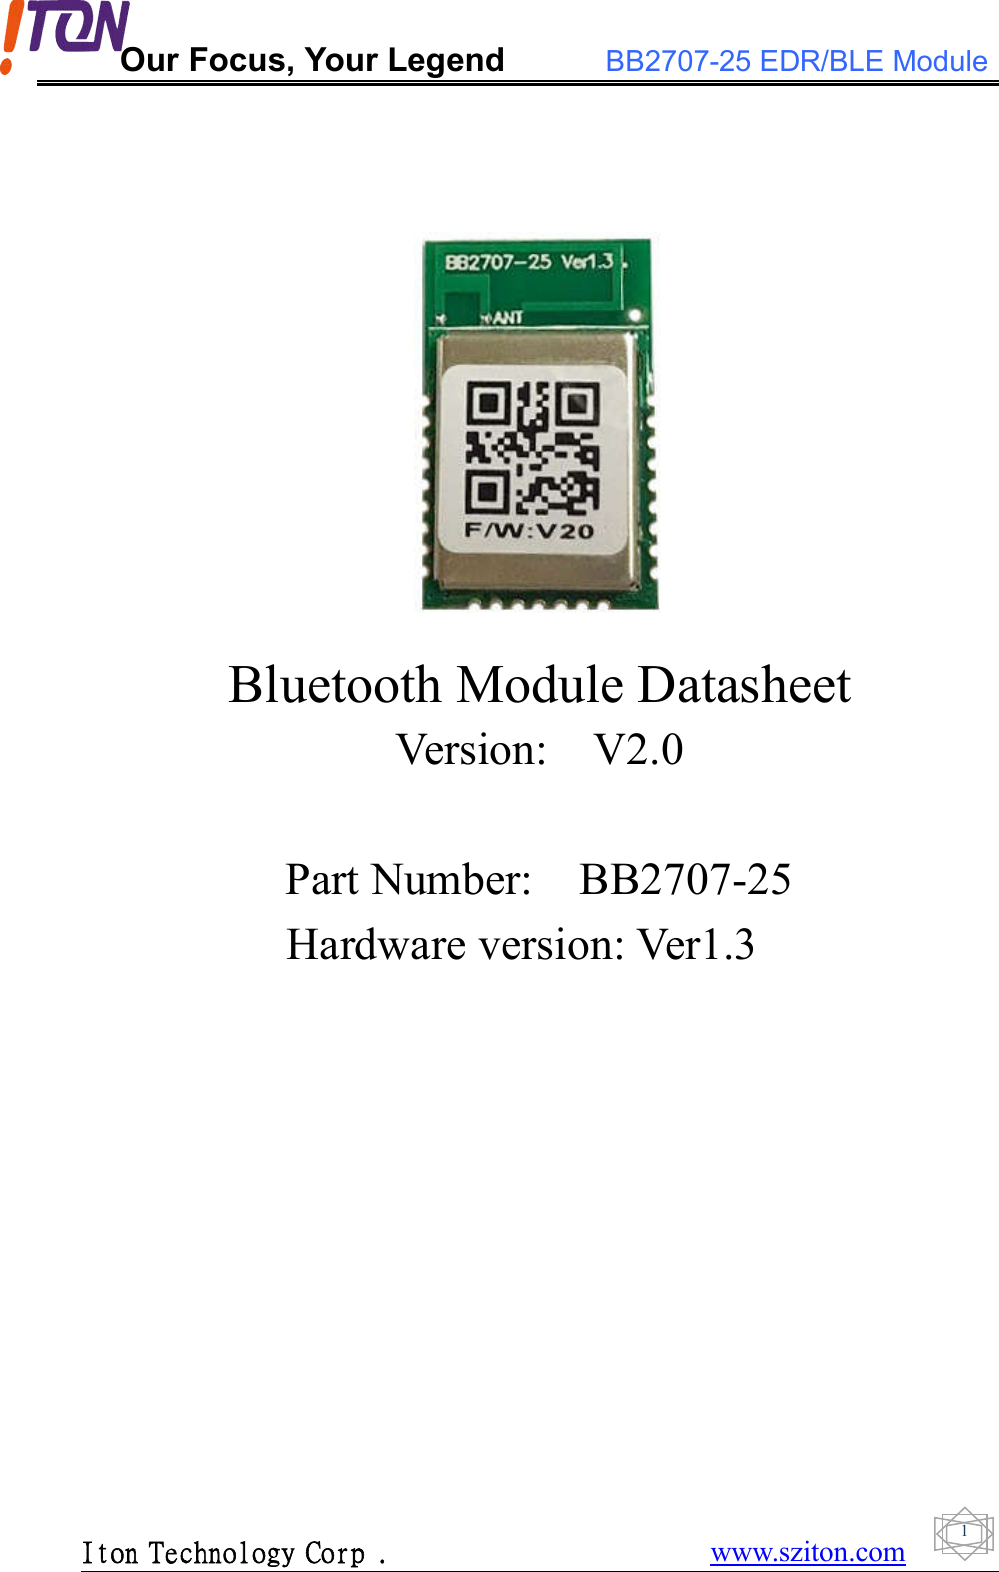 Our Focus, Your Legend BB2707-25 EDR/BLE ModuleIton Technology Corp . www.sziton.com1Bluetooth Module DatasheetVersion: V2.0Part Number: BB2707-25Hardware version: Ver1.3